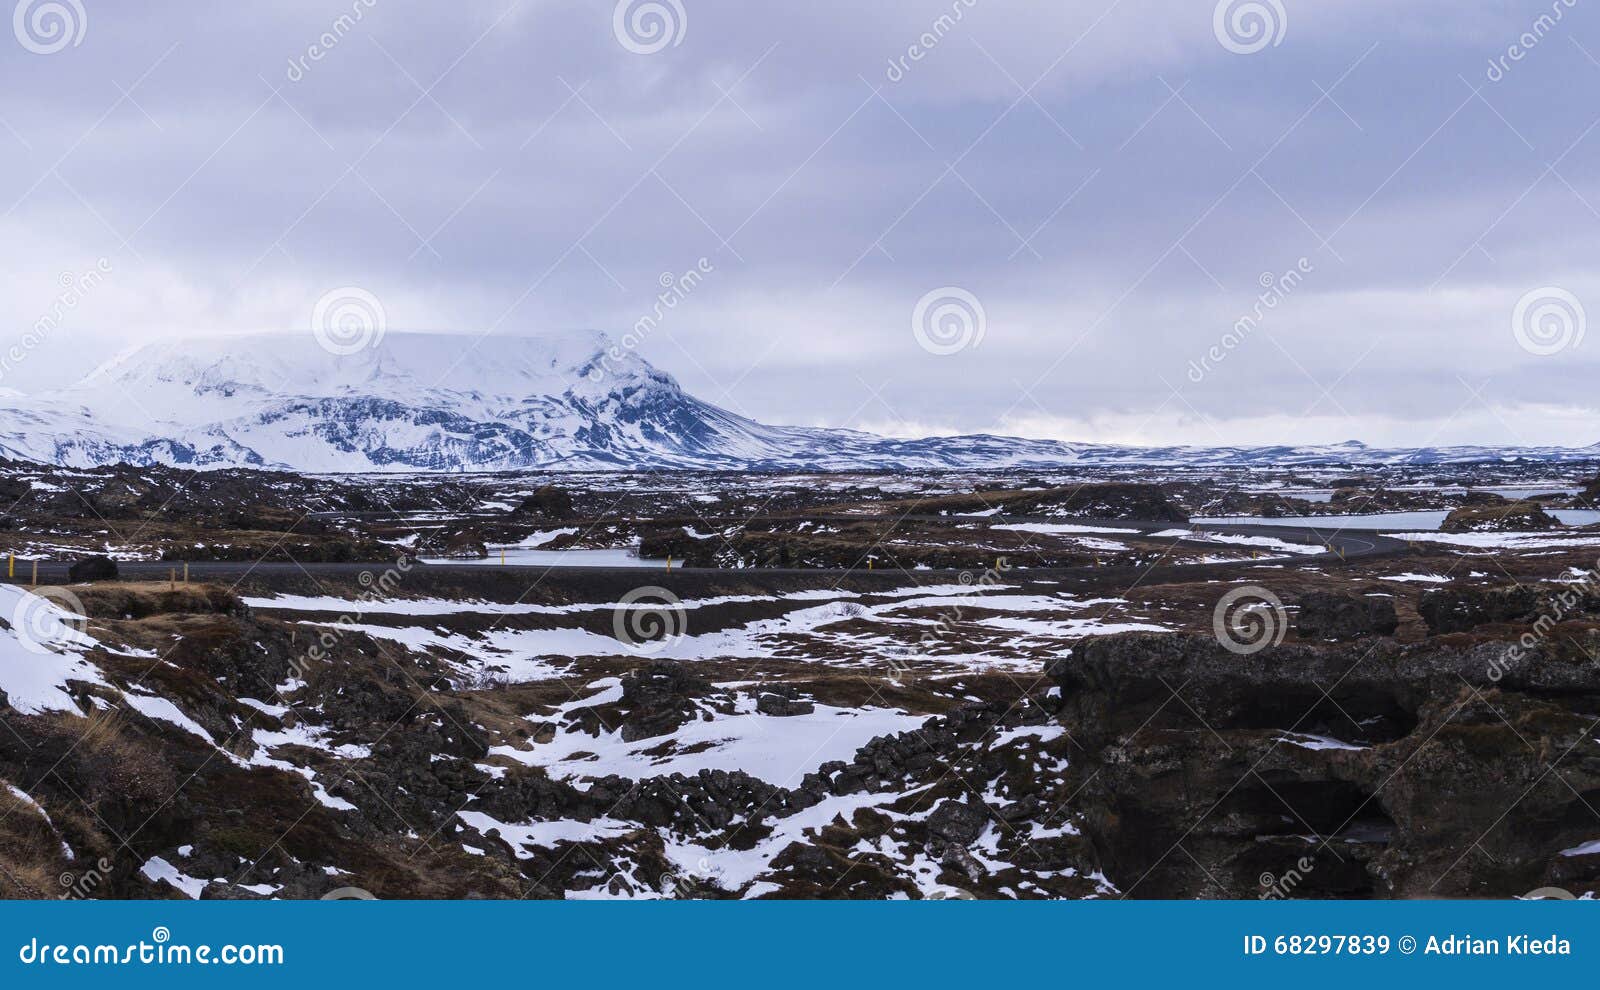 gloomy snowy volcanic landscape